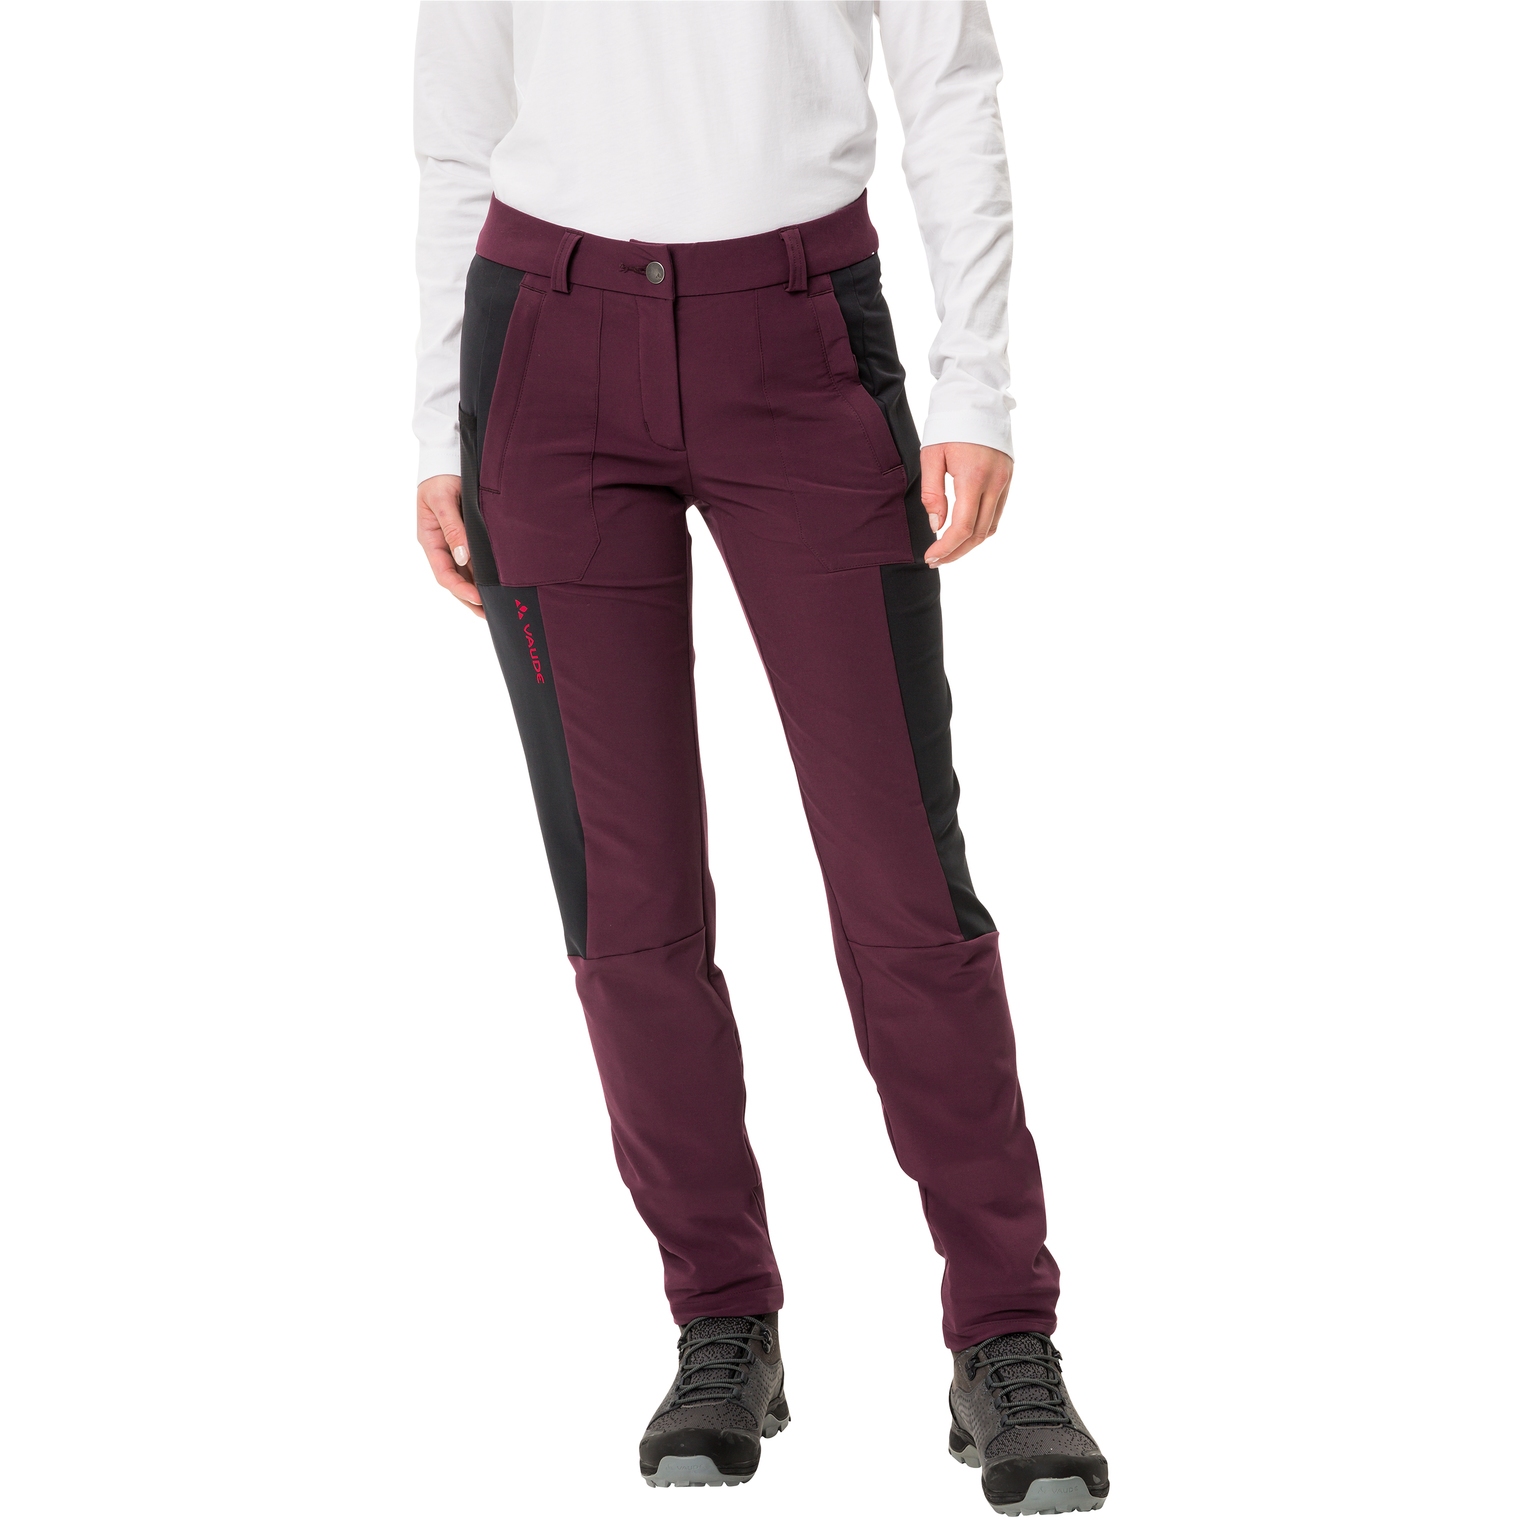 Image of Vaude Women's Elope Slim Fit Pants - cassis